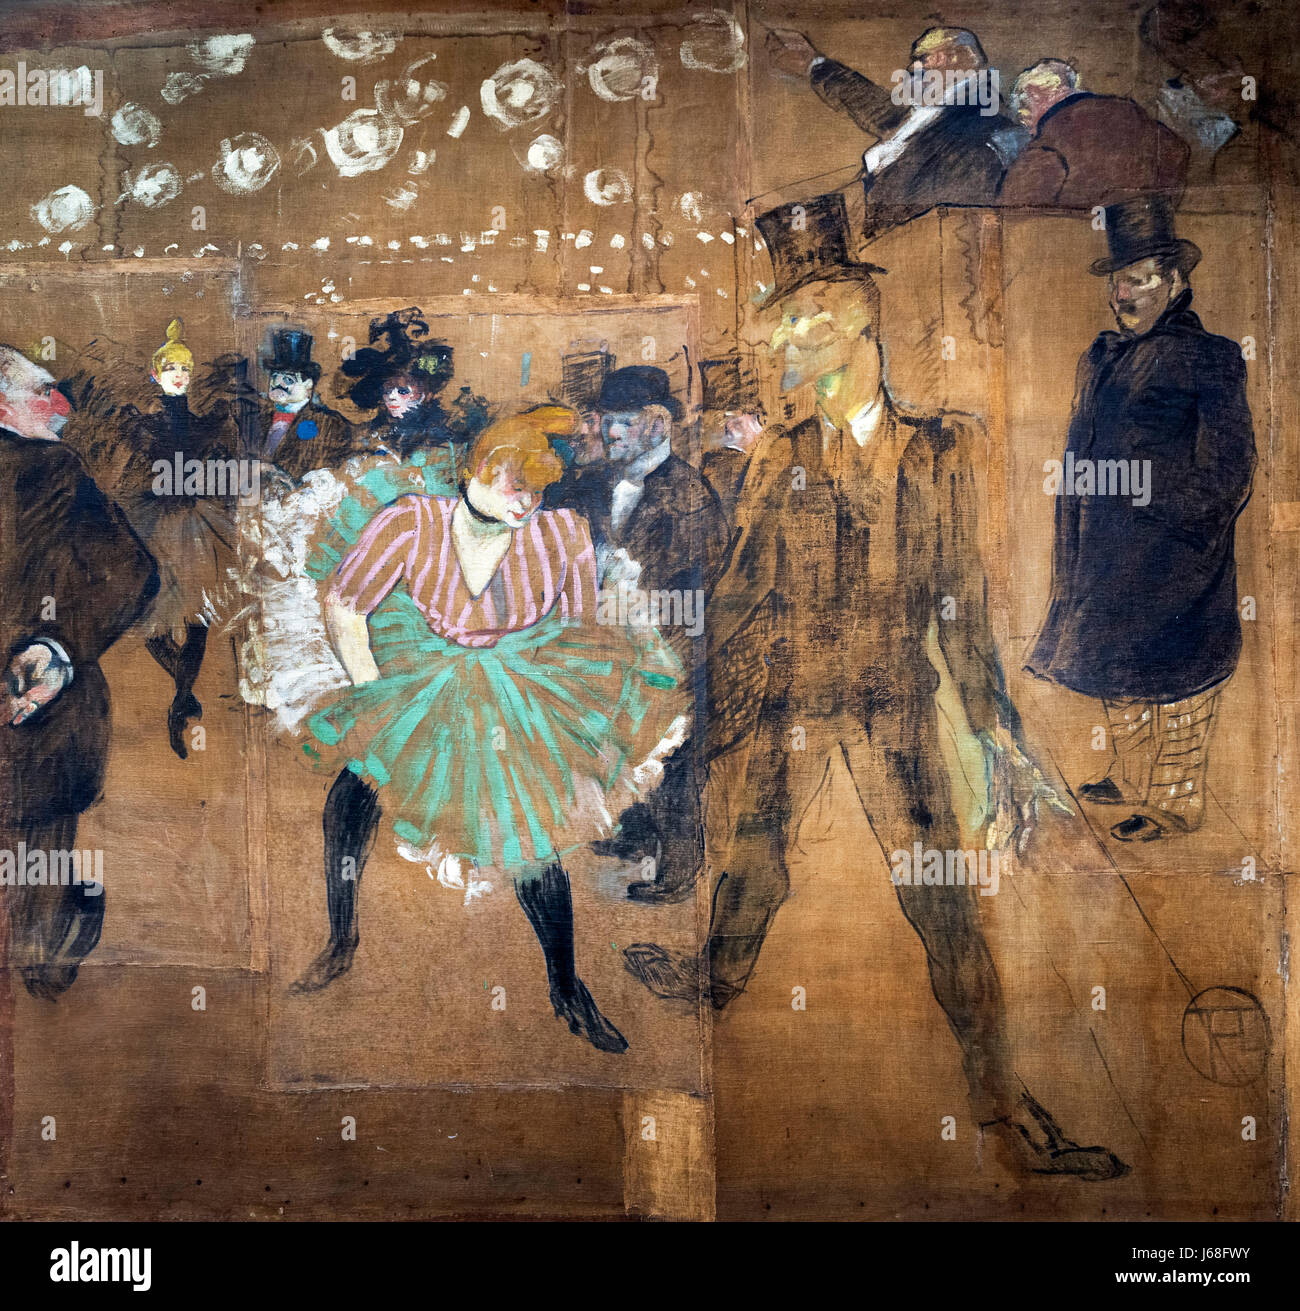 Pittura di Toulouse-Lautrec. 'La Danse au Moulin Rouge" (Danza al Moulin Rouge) da Henri de Toulouse-Lautrec (1864-1901), olio su tela, 1895. La pittura è anche noto come 'La Goulue et Valentin le Désossé' Foto Stock